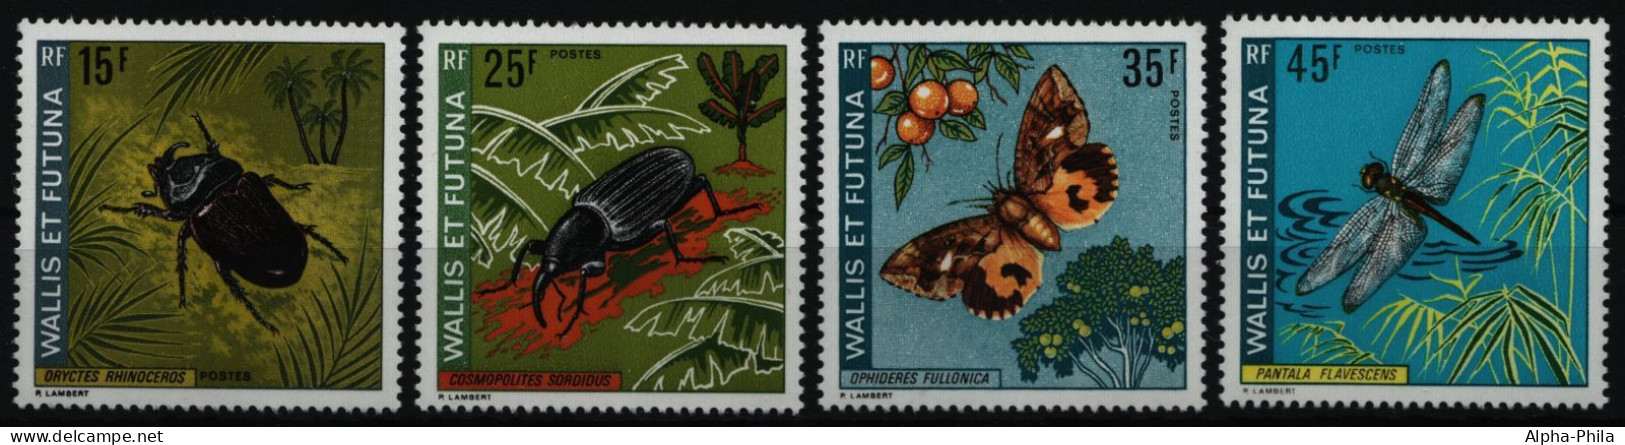 Wallis & Futuna 1974 - Mi-Nr. 254-257 ** - MNH - Insekten / Insects - Unused Stamps